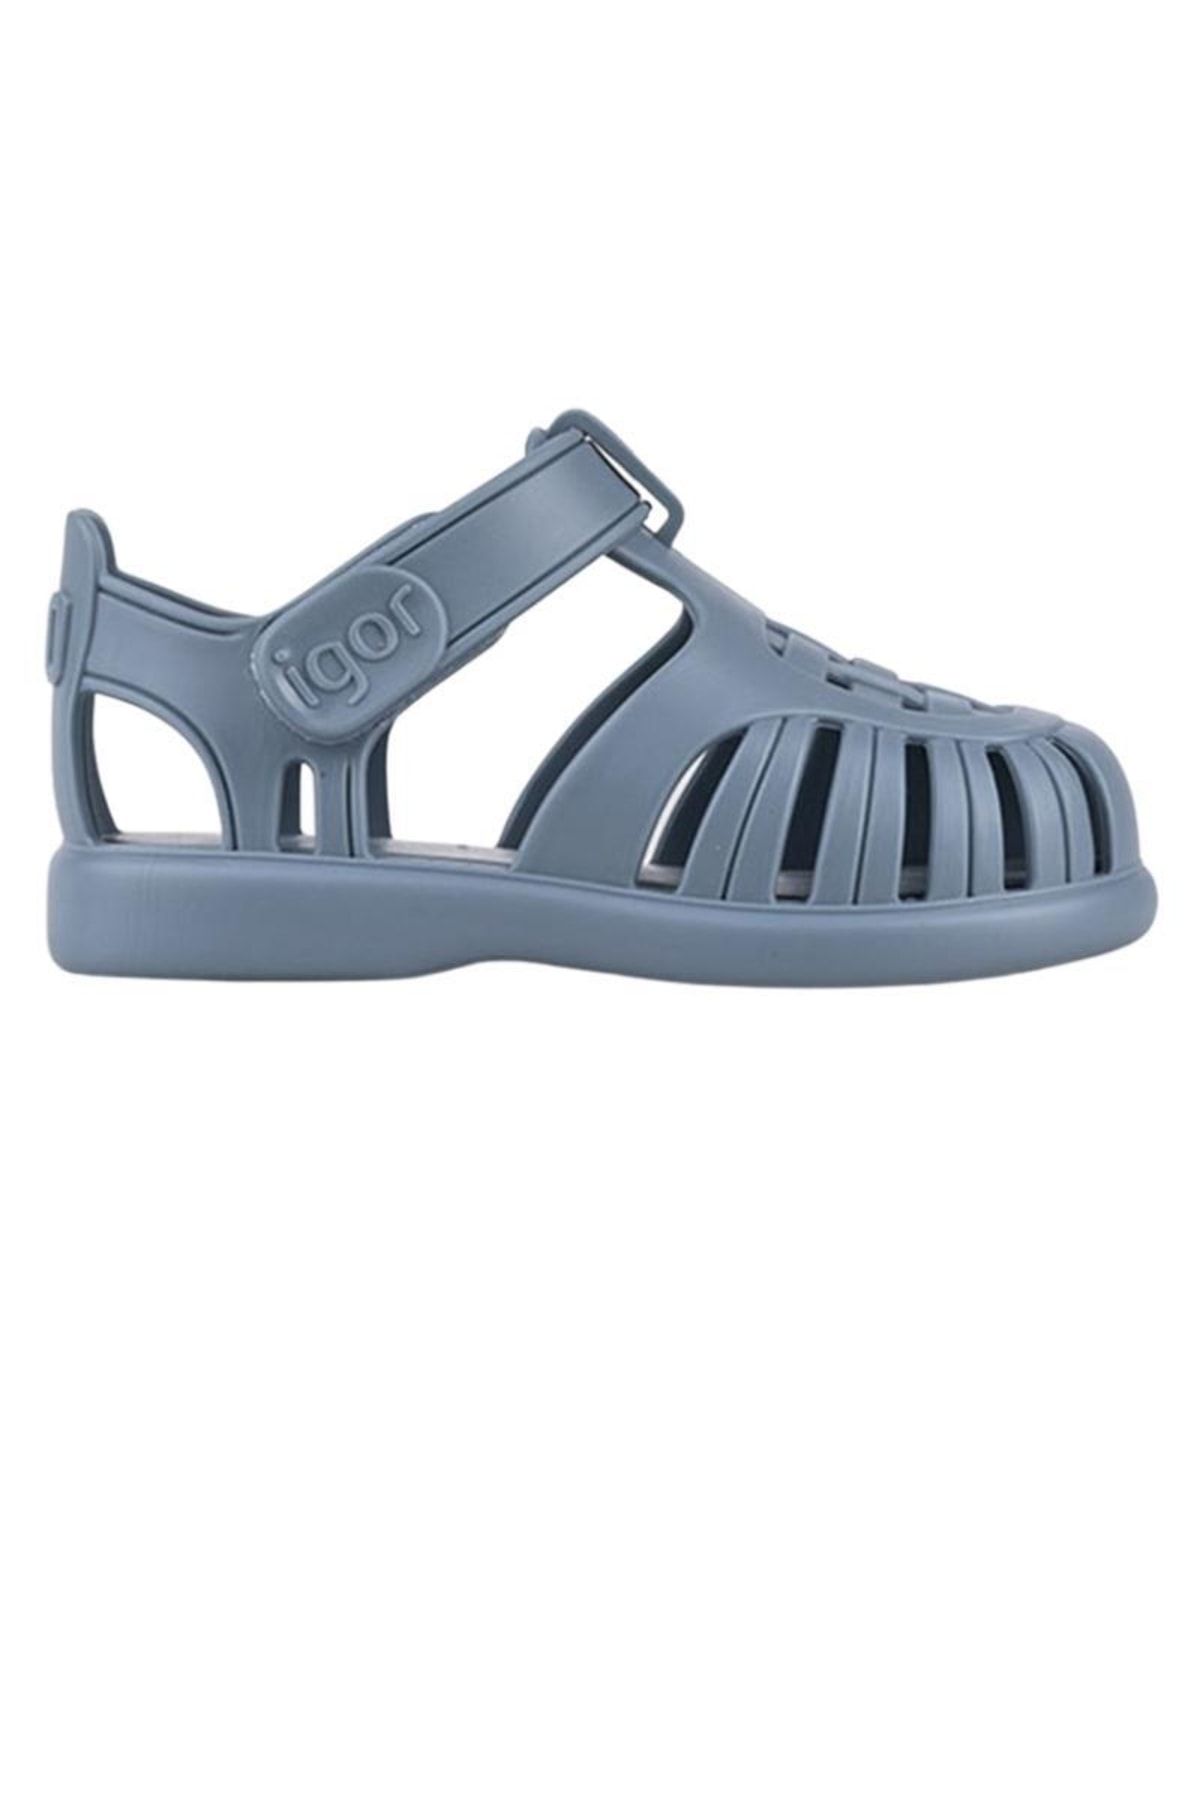 IGOR Tobby Solid S10271 Çocuk Sandalet